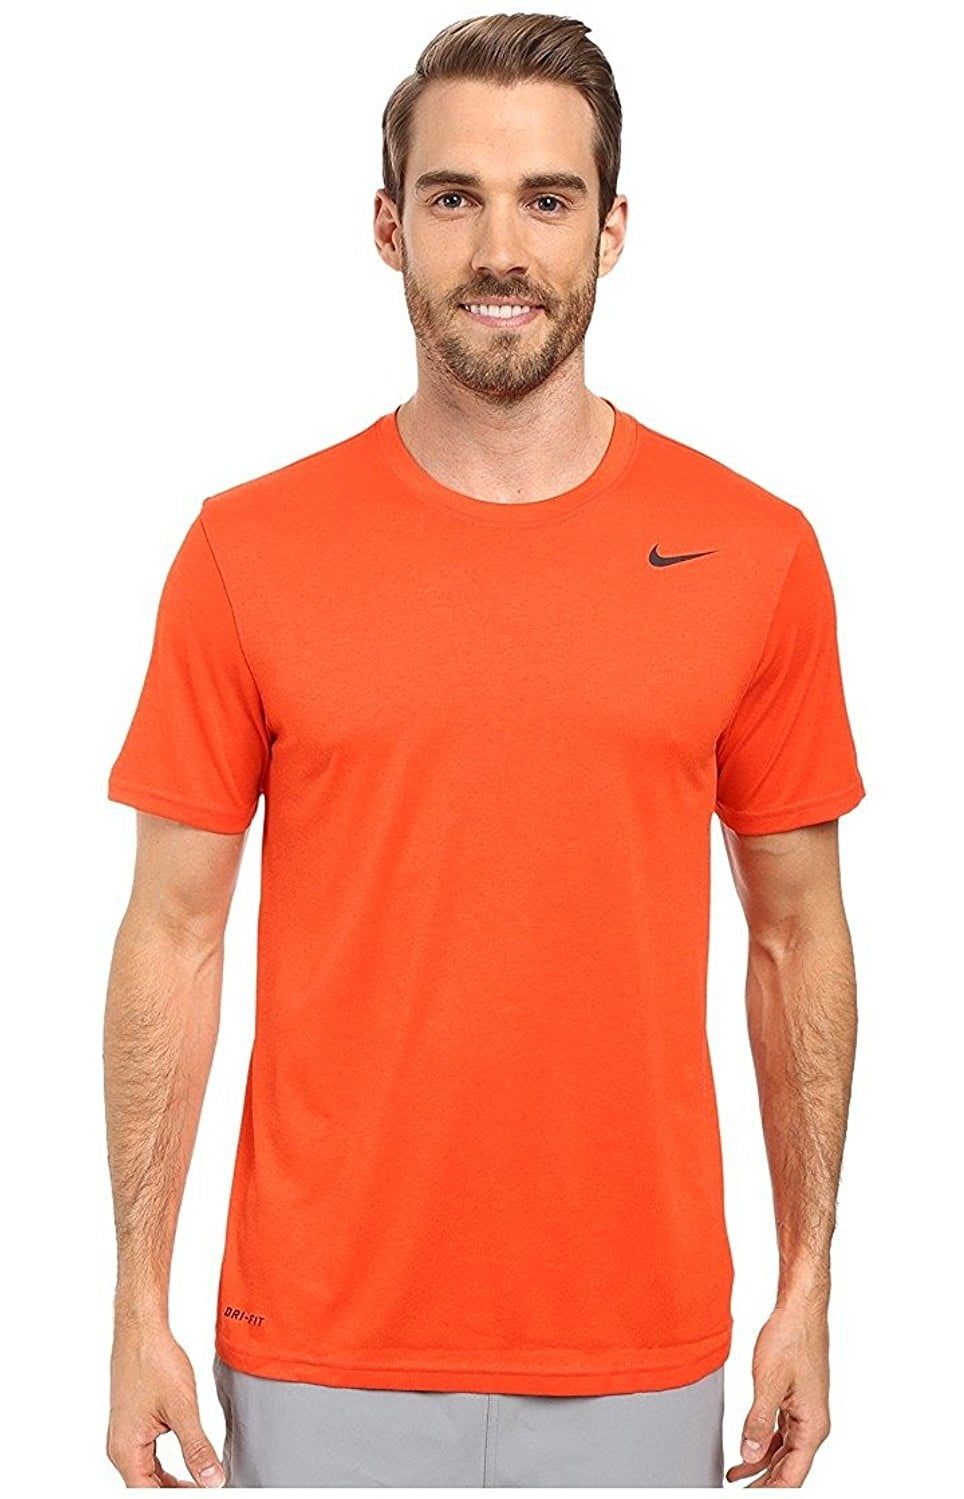 Nike Men's Dri-Fit Legend 2.0 Training T-Shirt-Orange - Walmart.com